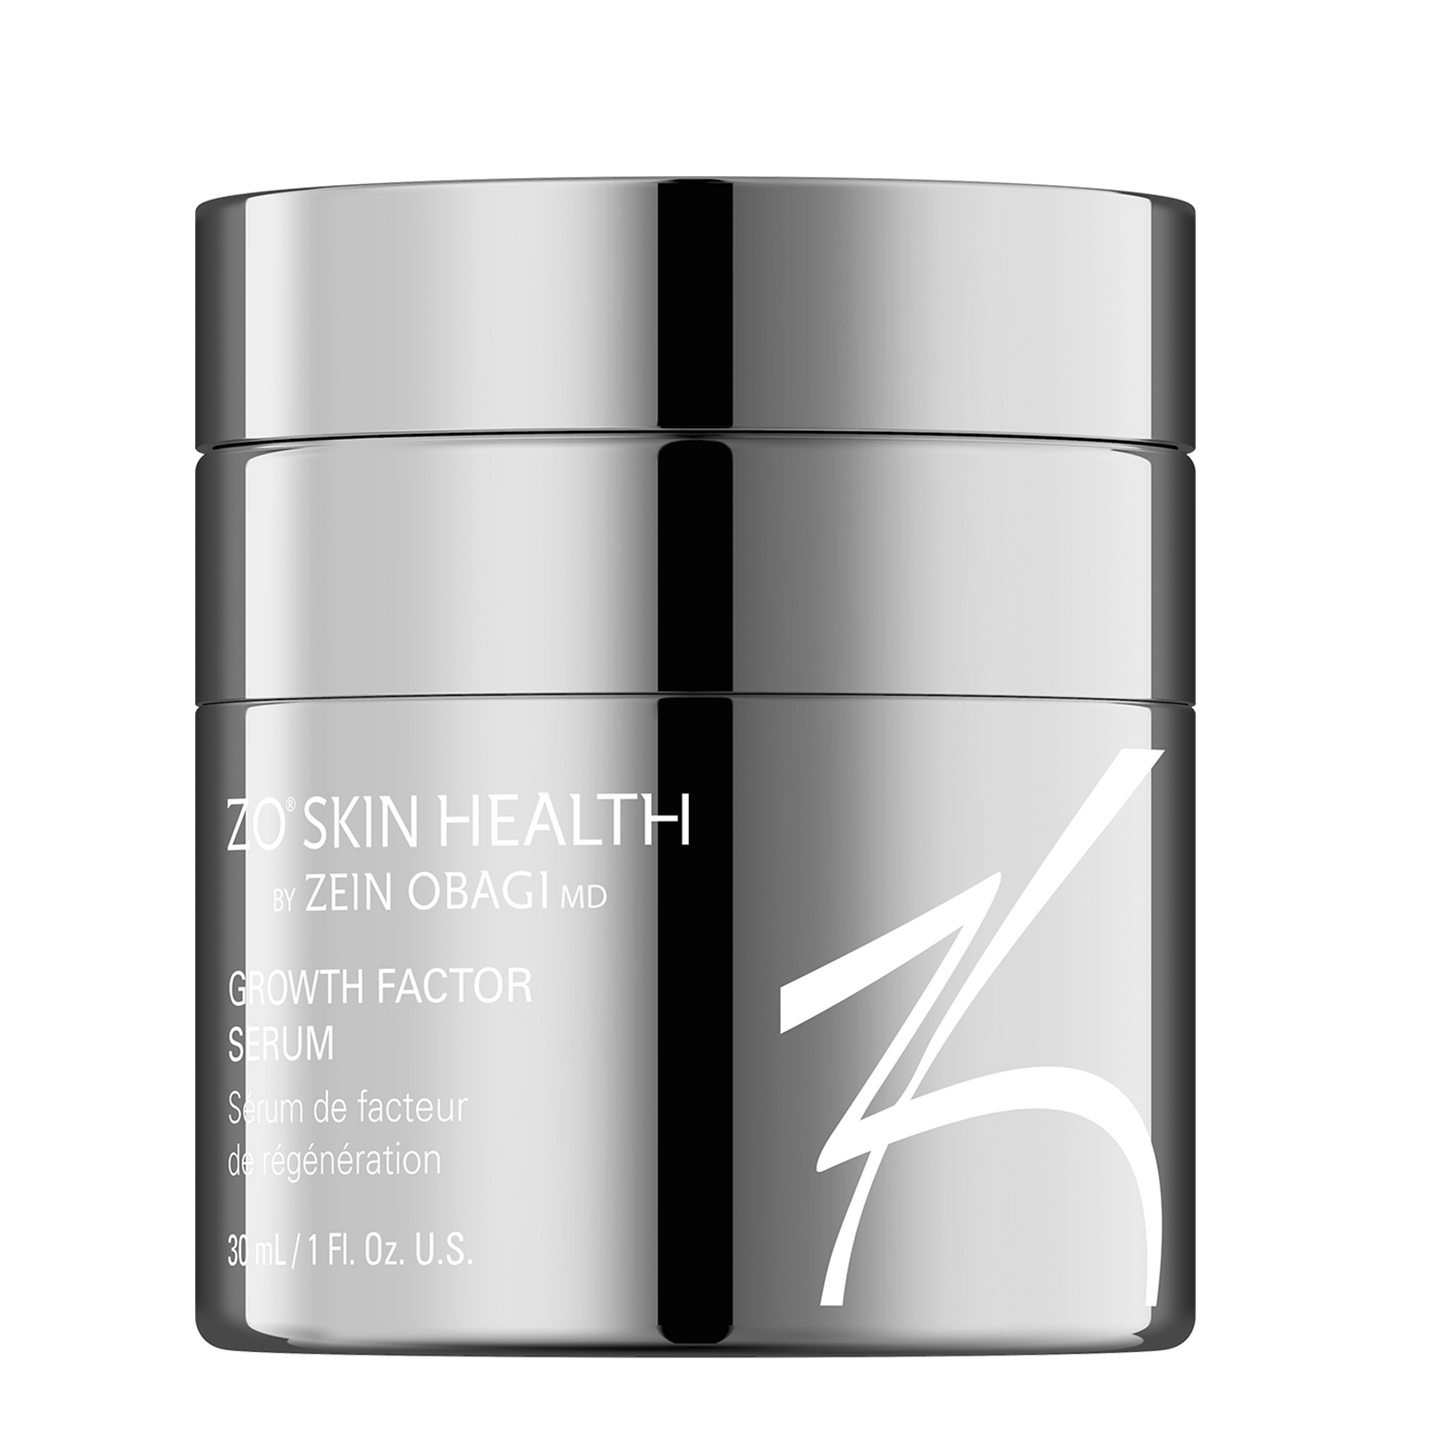 ZO Skin Health Growth Factor Serum 30 ml / 1 fl oz